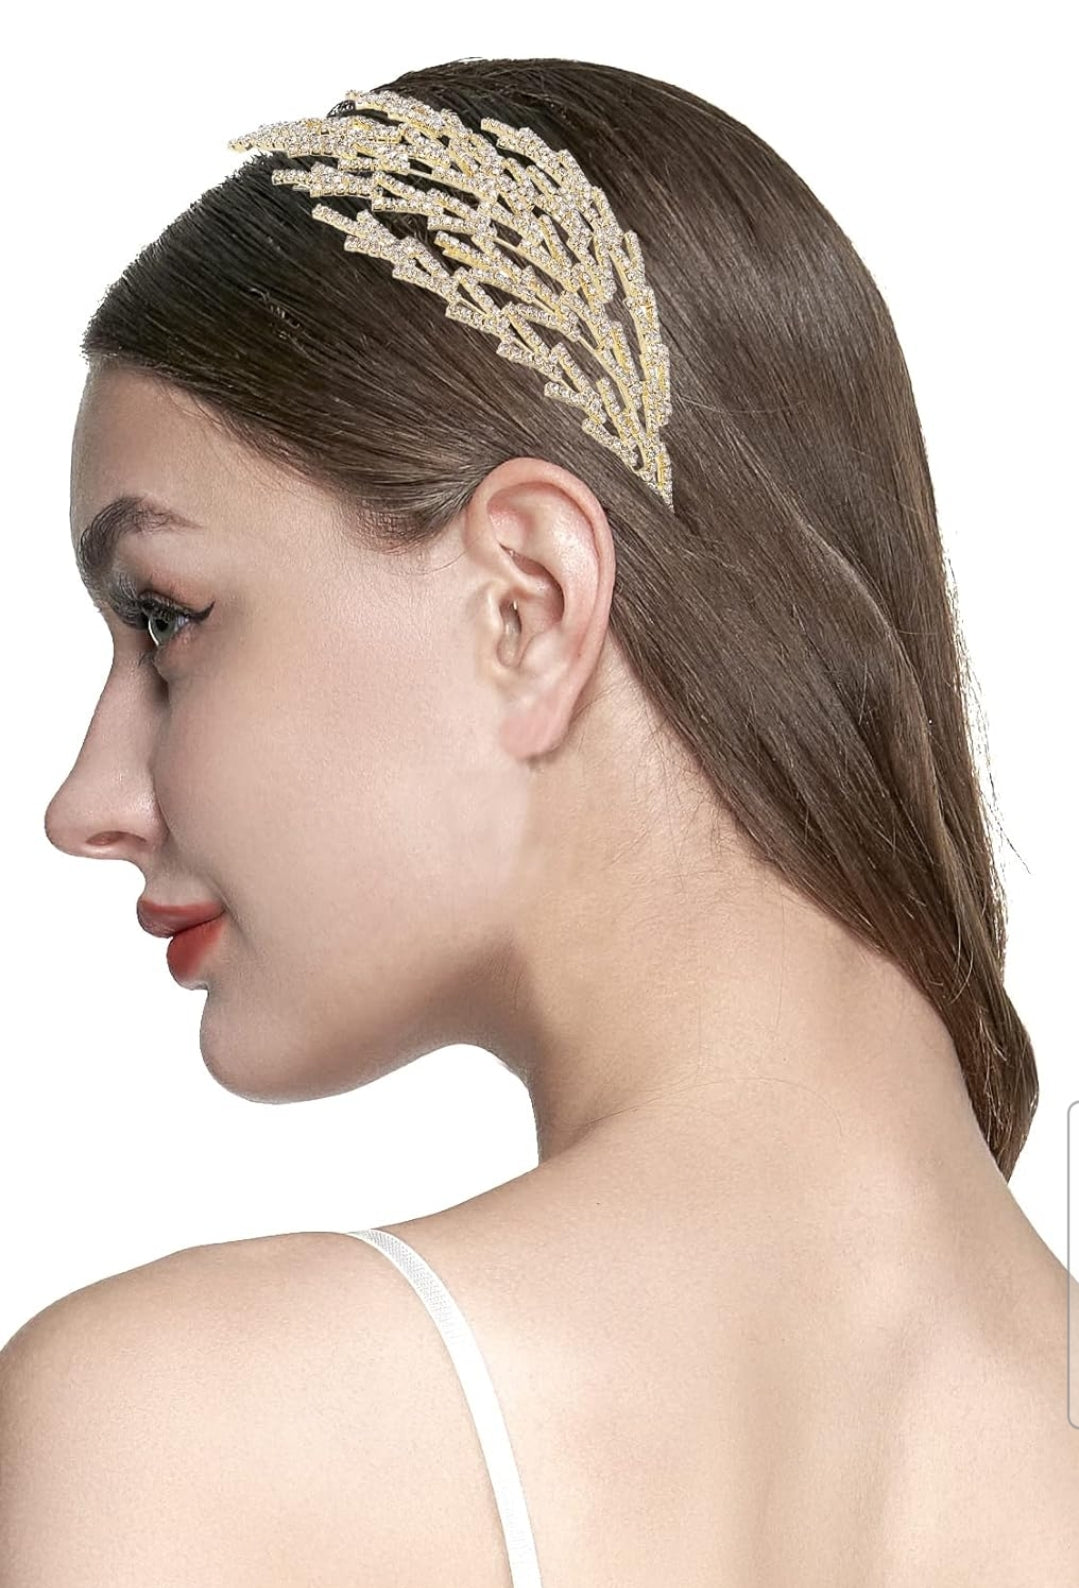 Tiara - Laurel - Hair Jewelry - Queen - Goddess - Costume Accessories - 2 Colors